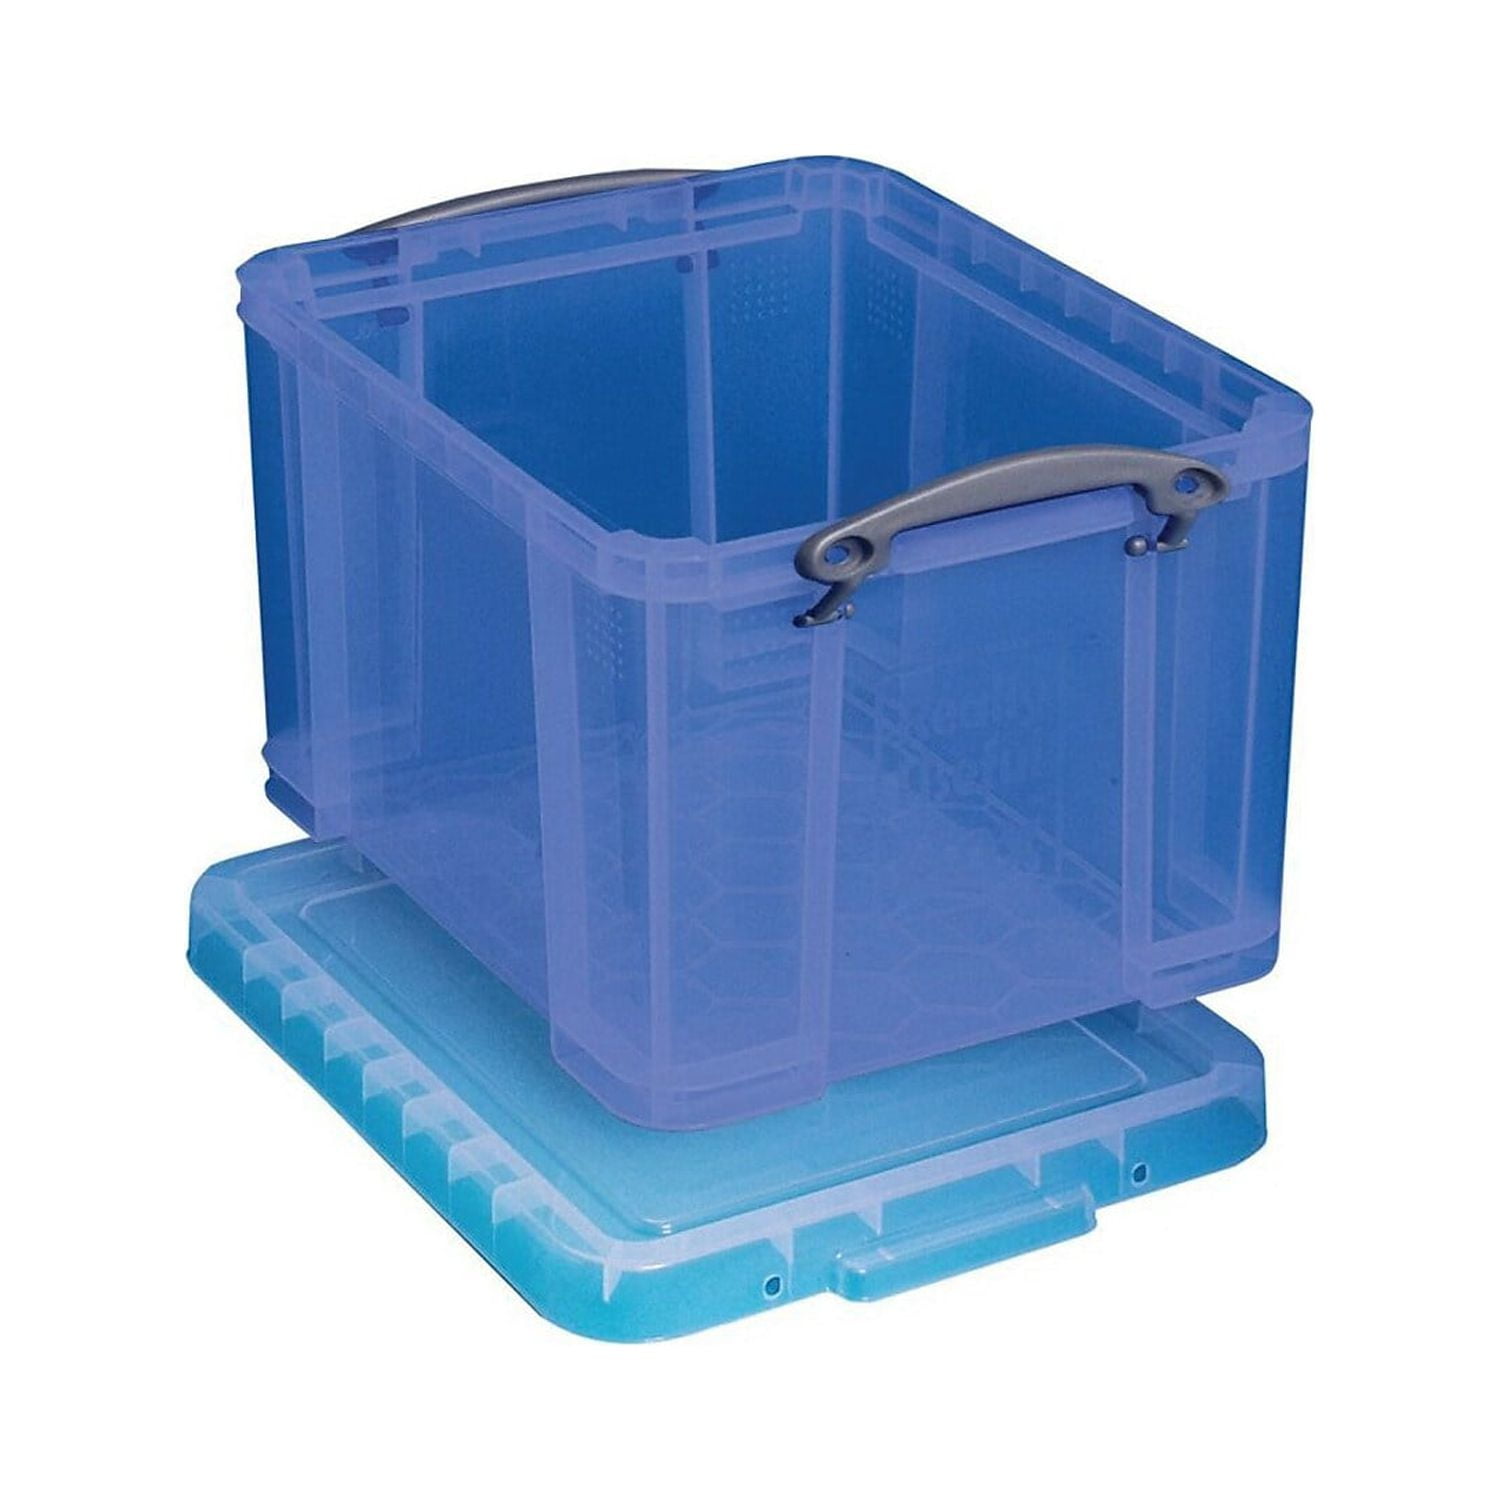 2pcs Portable Storage Box Plastic Household Containers Storage Box